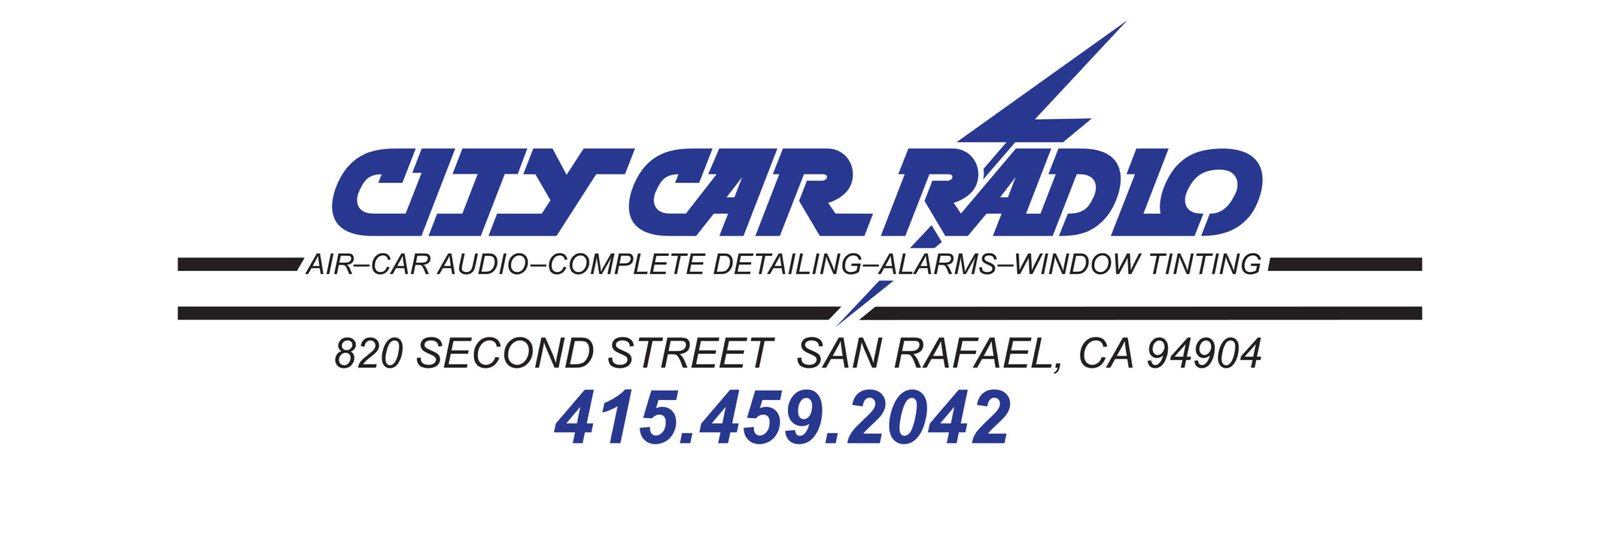 City Car Radio And Air, Inc.